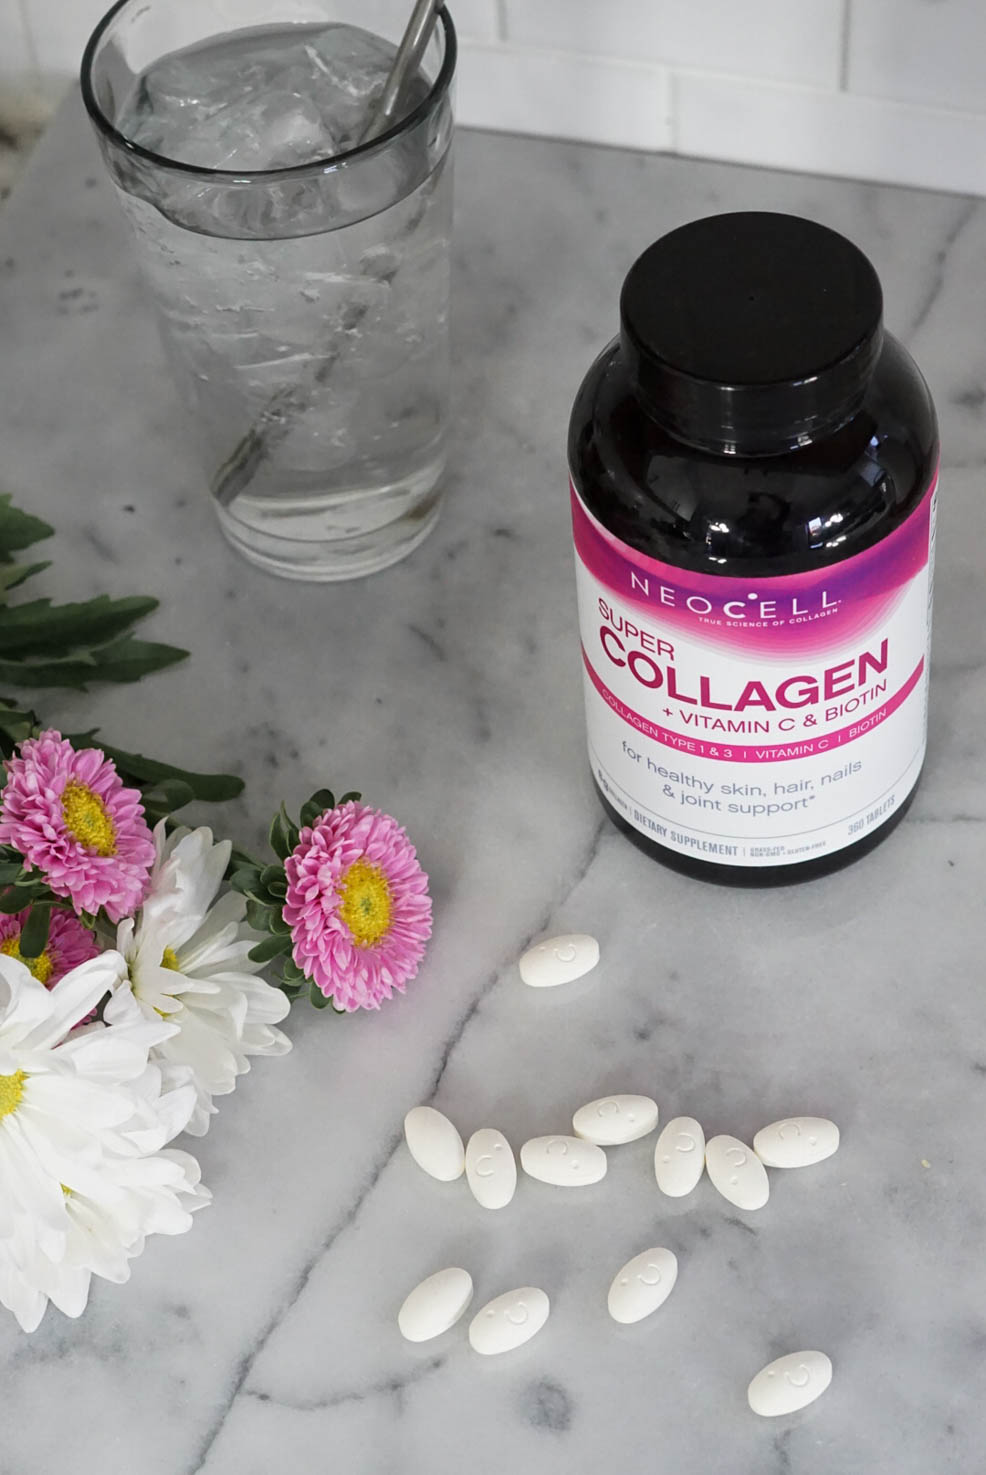 collagen benefits tablets vs. powder